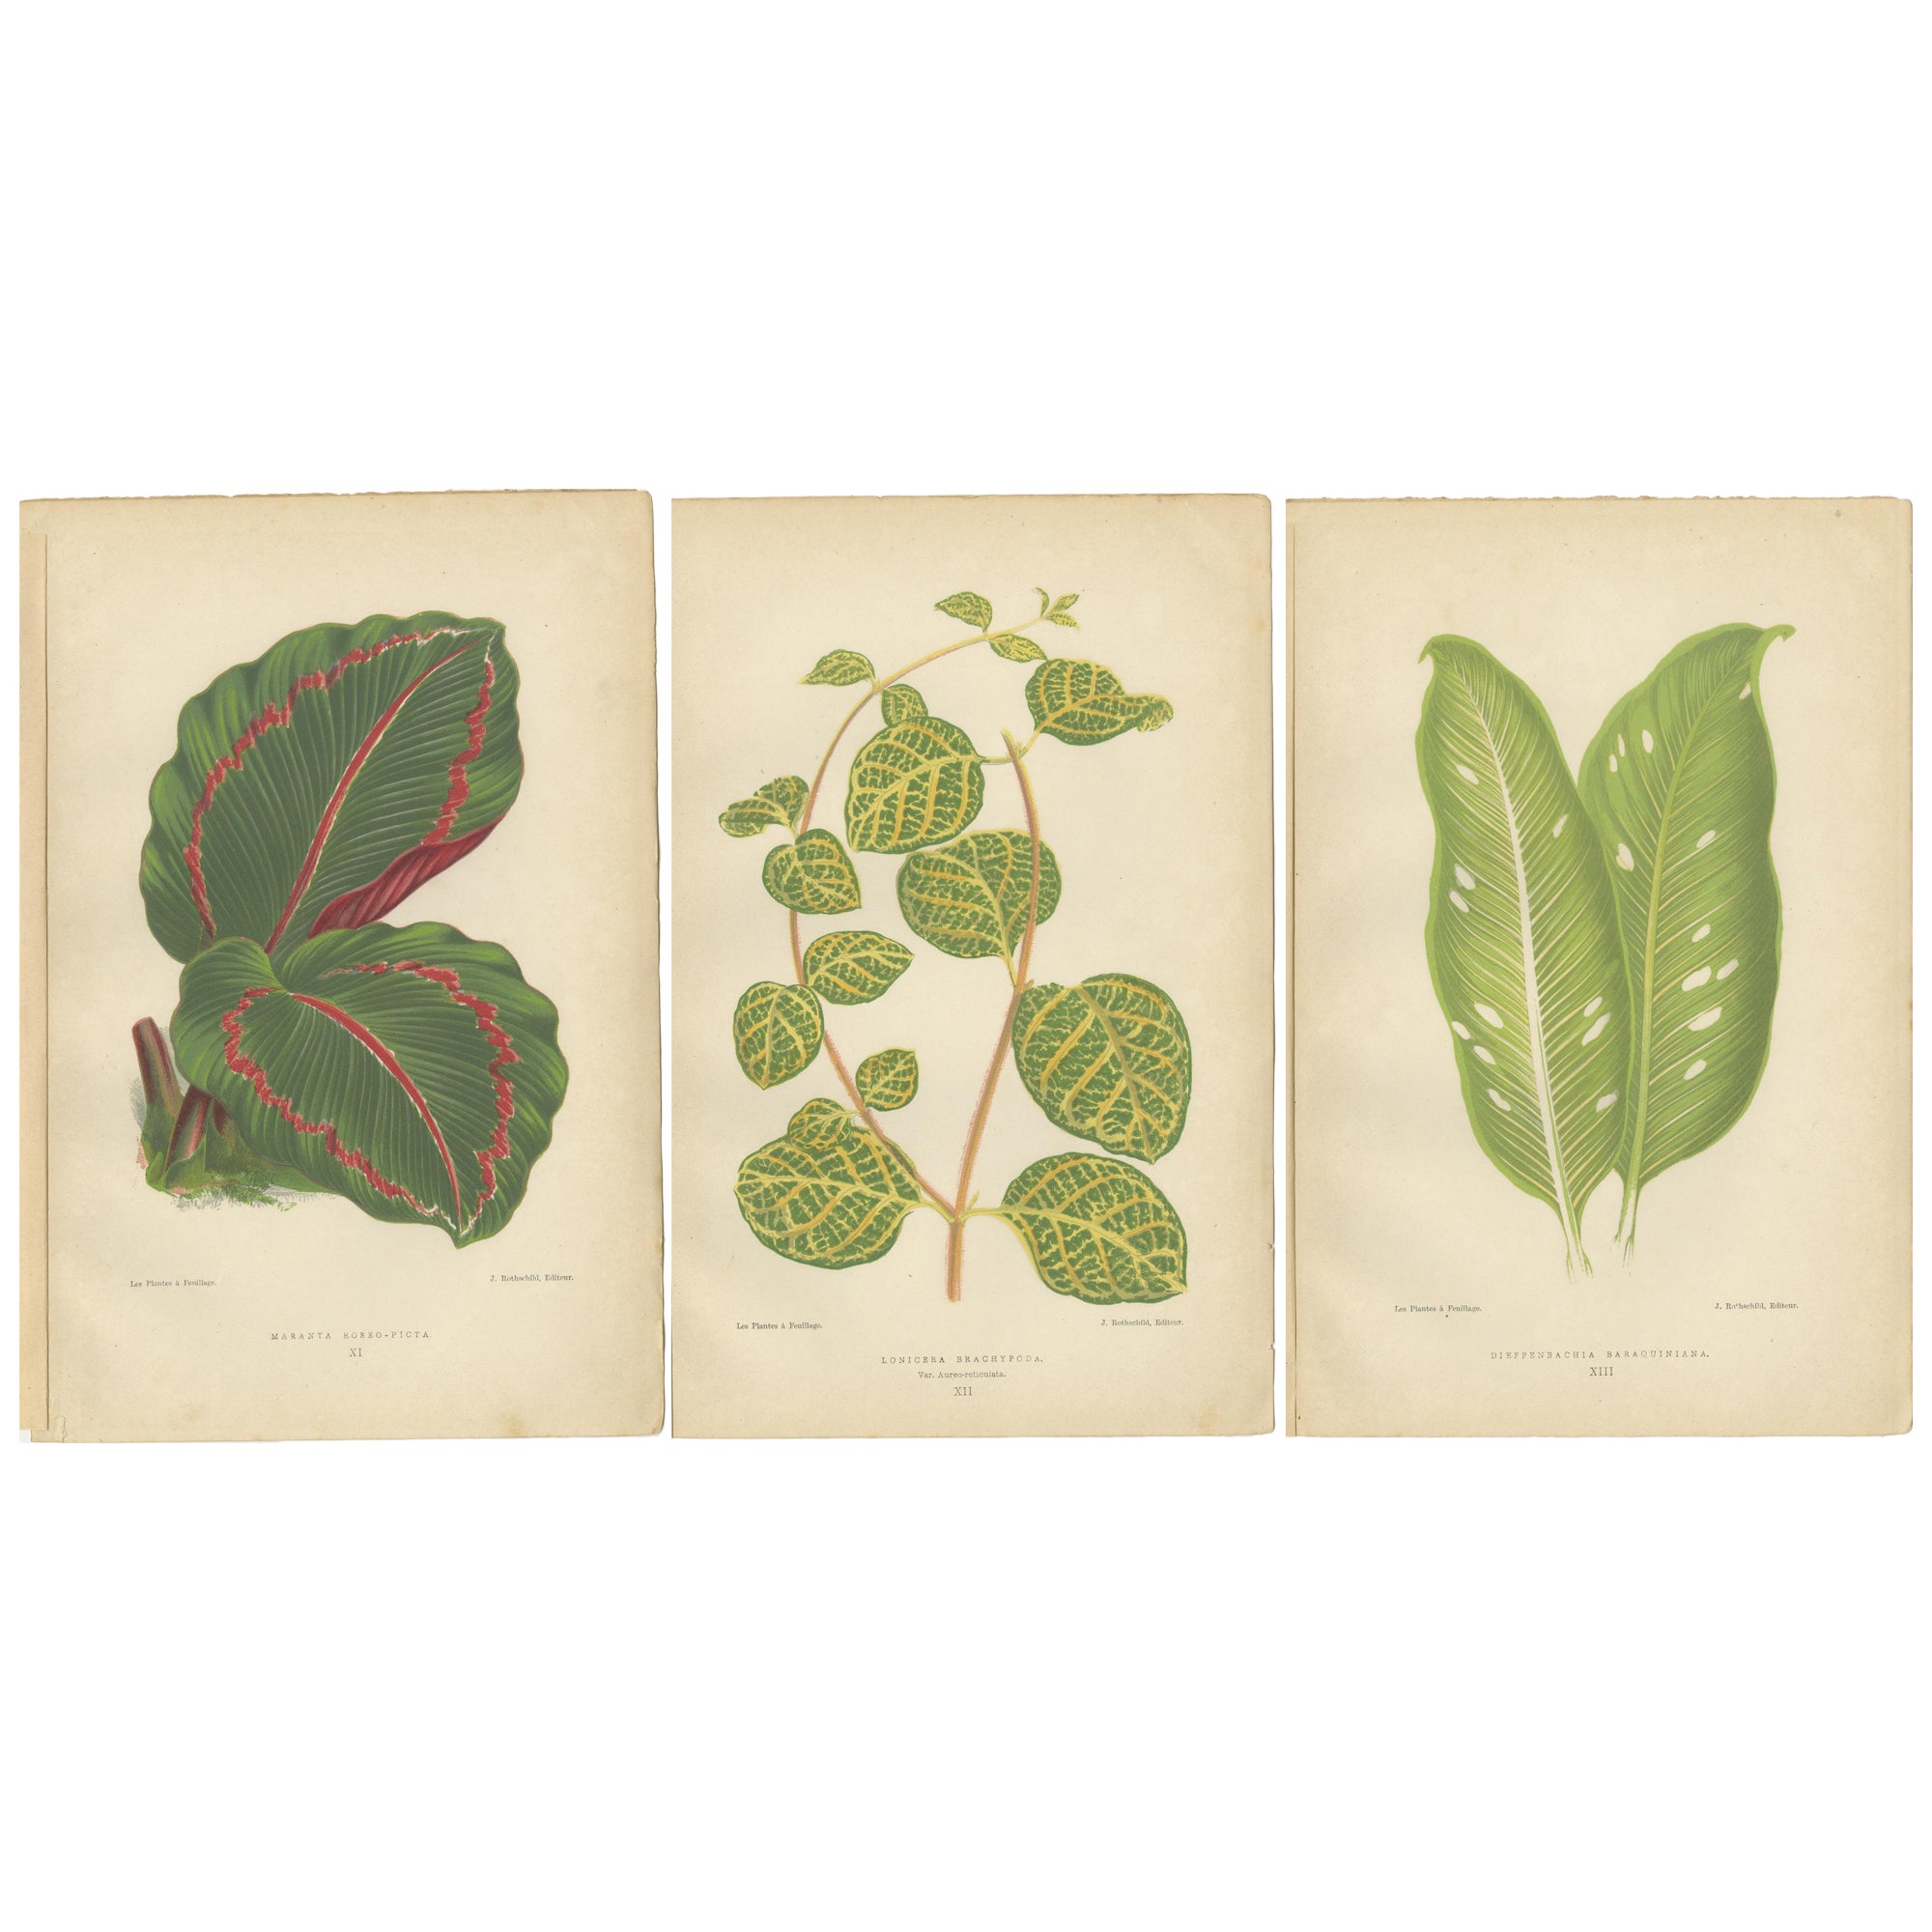 Vibrant Elegance: Botanical Illustrations of Foliage from 1880 Paris